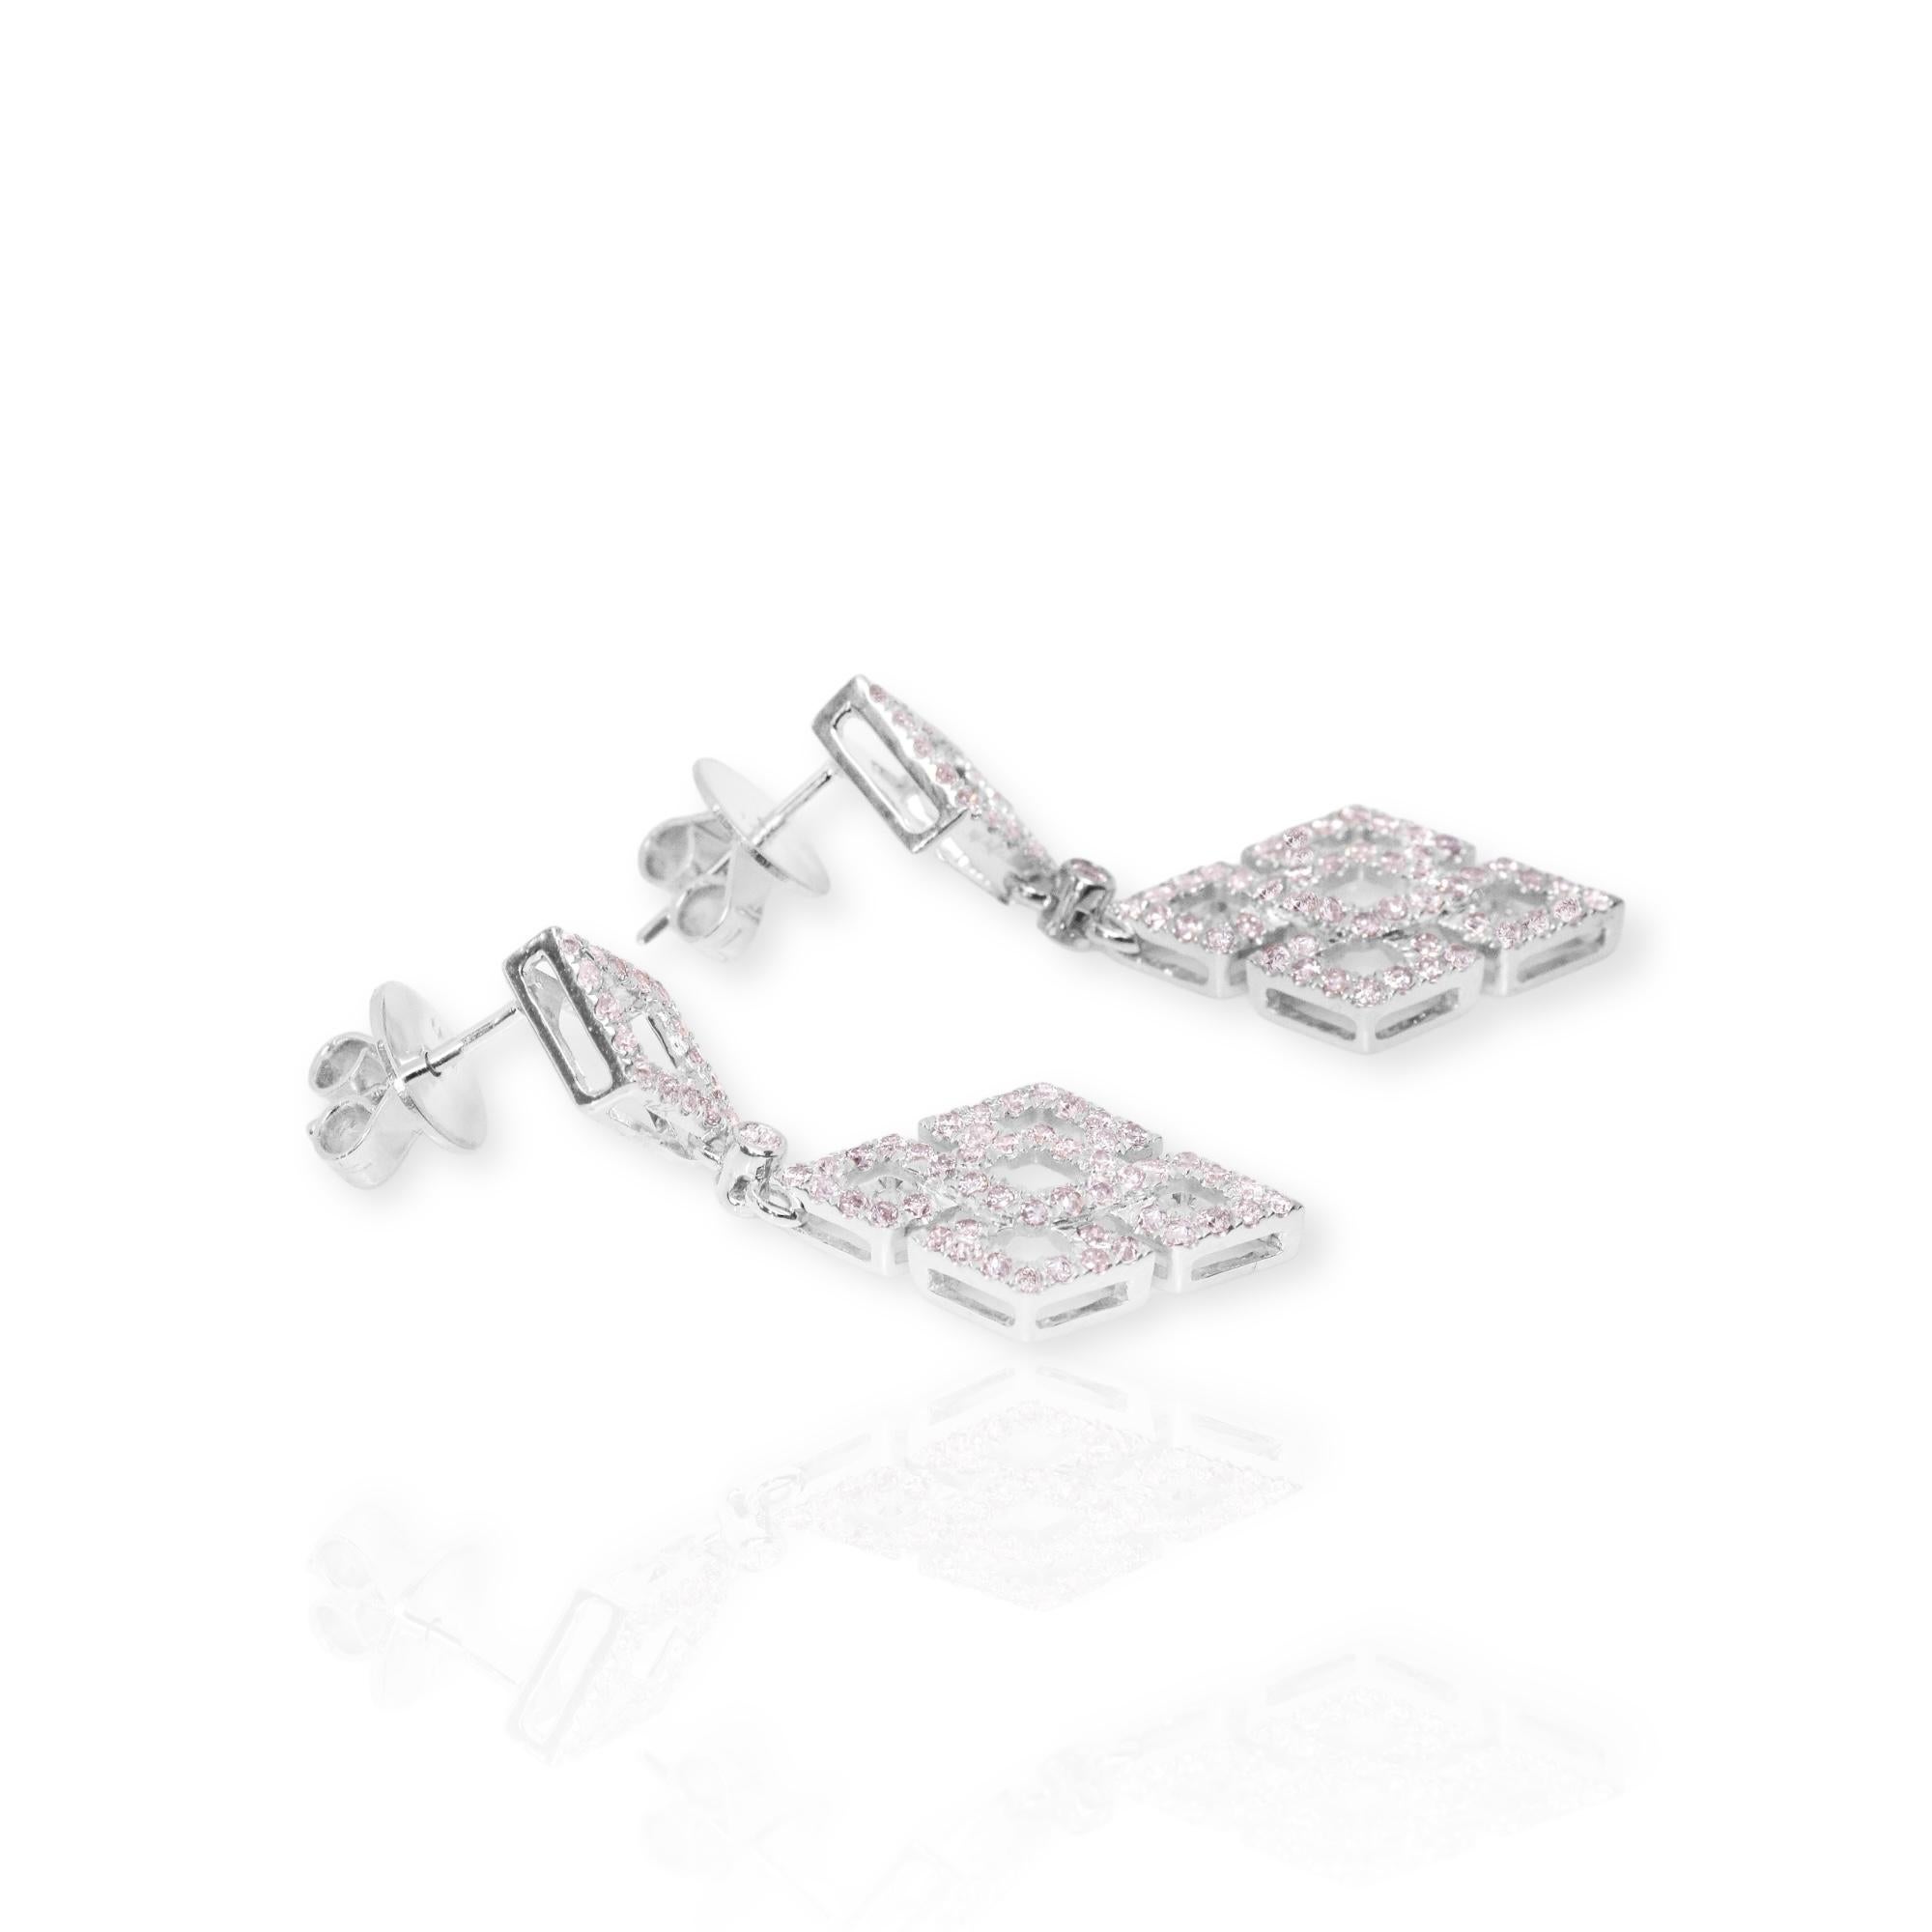 IGI 14K 0.96 ct Natural Pink Diamonds Art Deco Design Stud Earrings For Sale 1